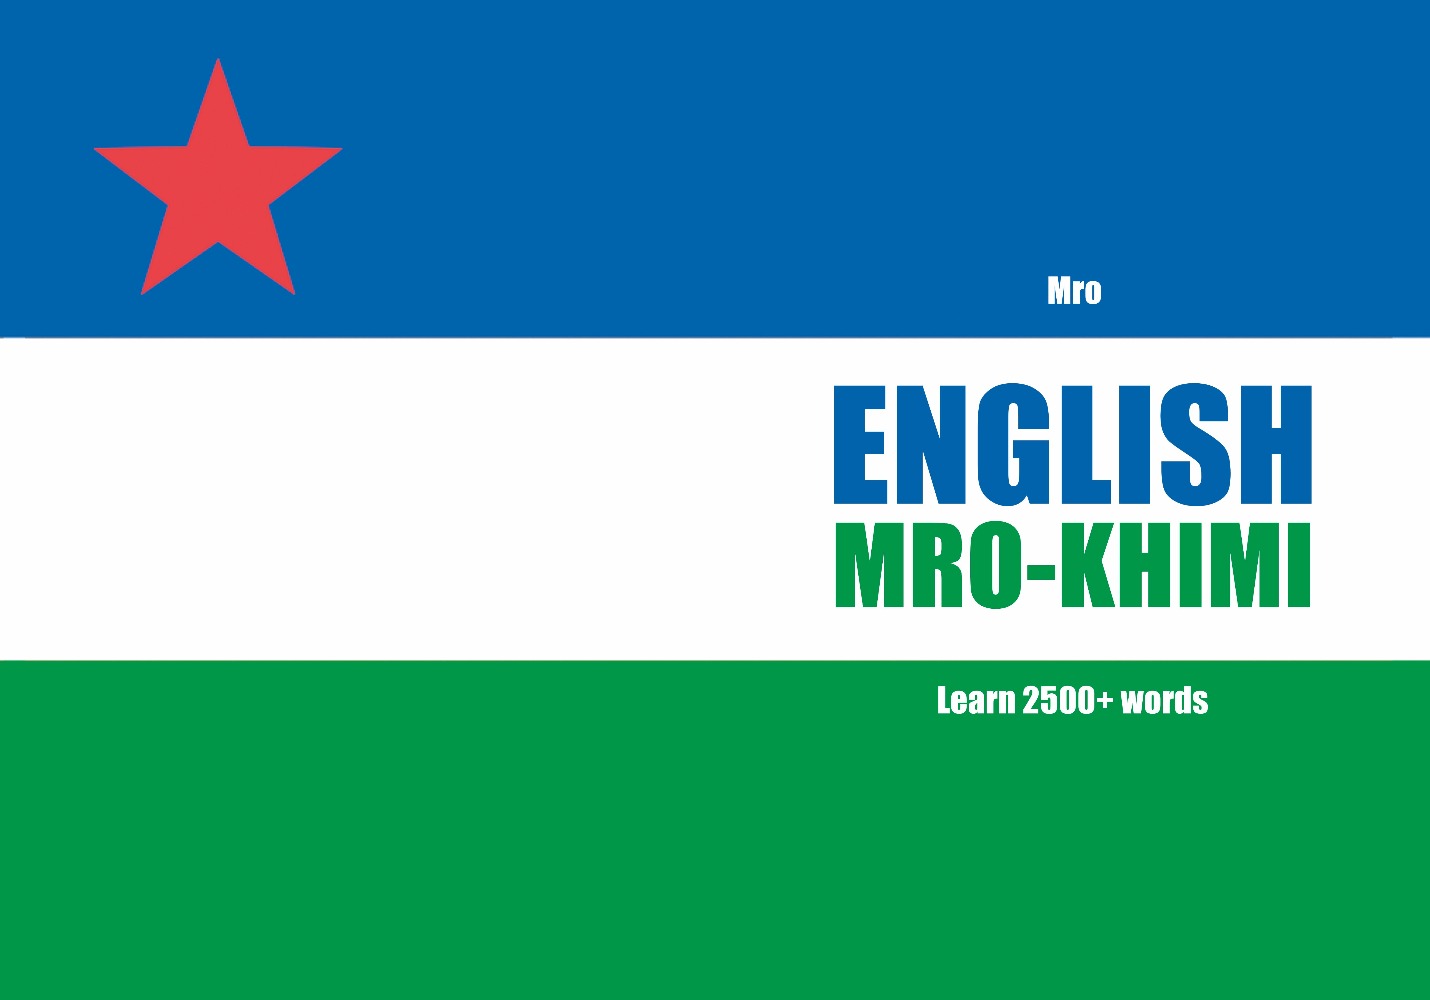 Mro Khimi language learning notebook cover